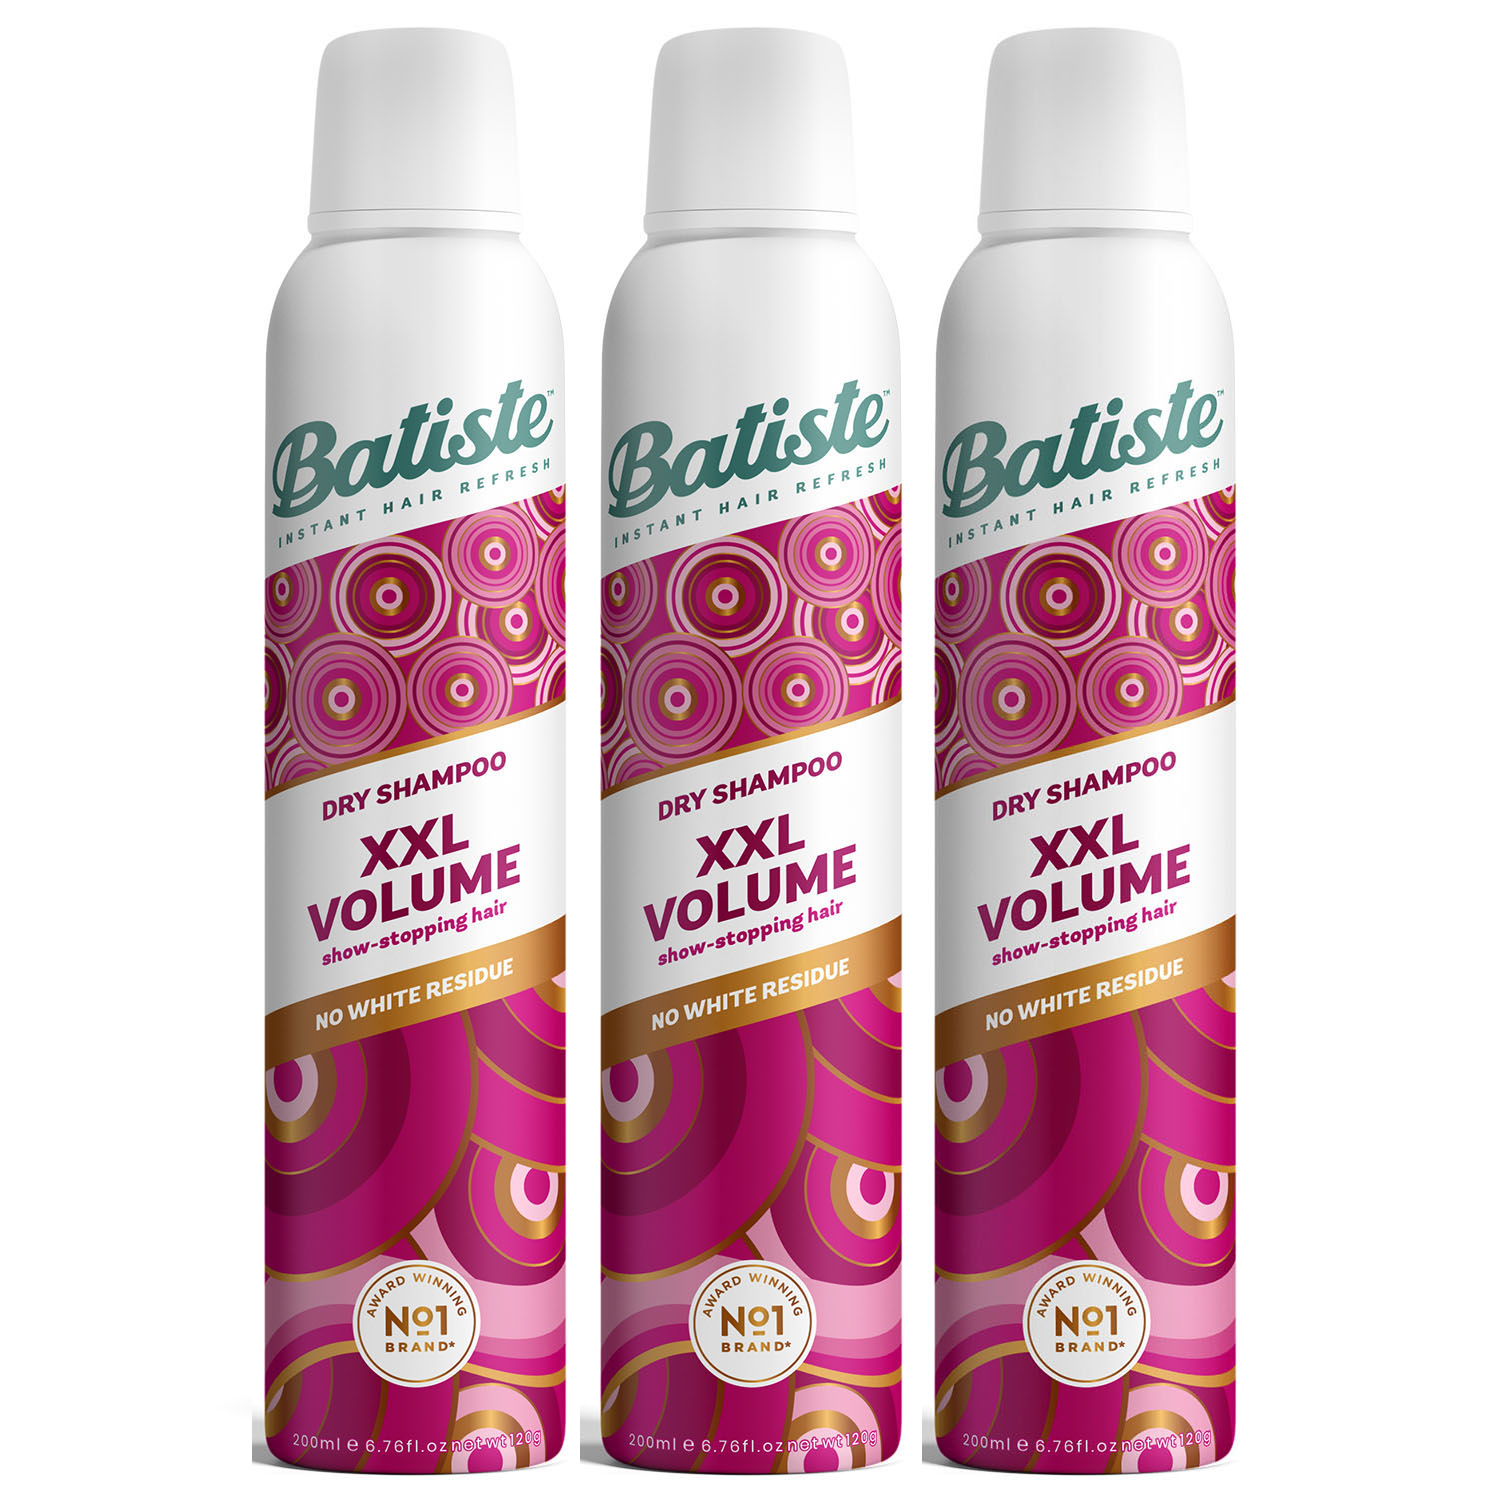 Batiste Комплект XXL Volume Spray Спрей для экстра объема волос 3 шт х 200 мл (Batiste, Stylist)